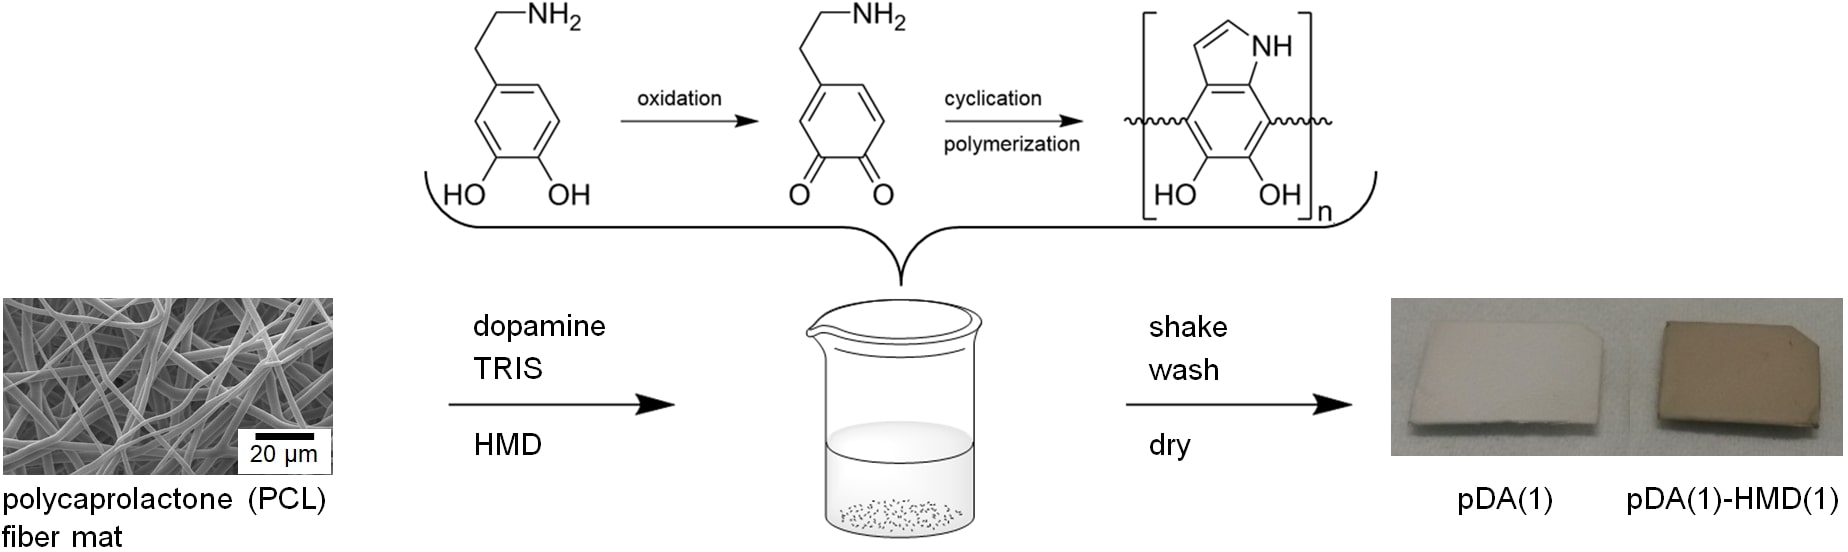 Polydopamine coating of polycaprolactone fiber mats (equation of polymerization